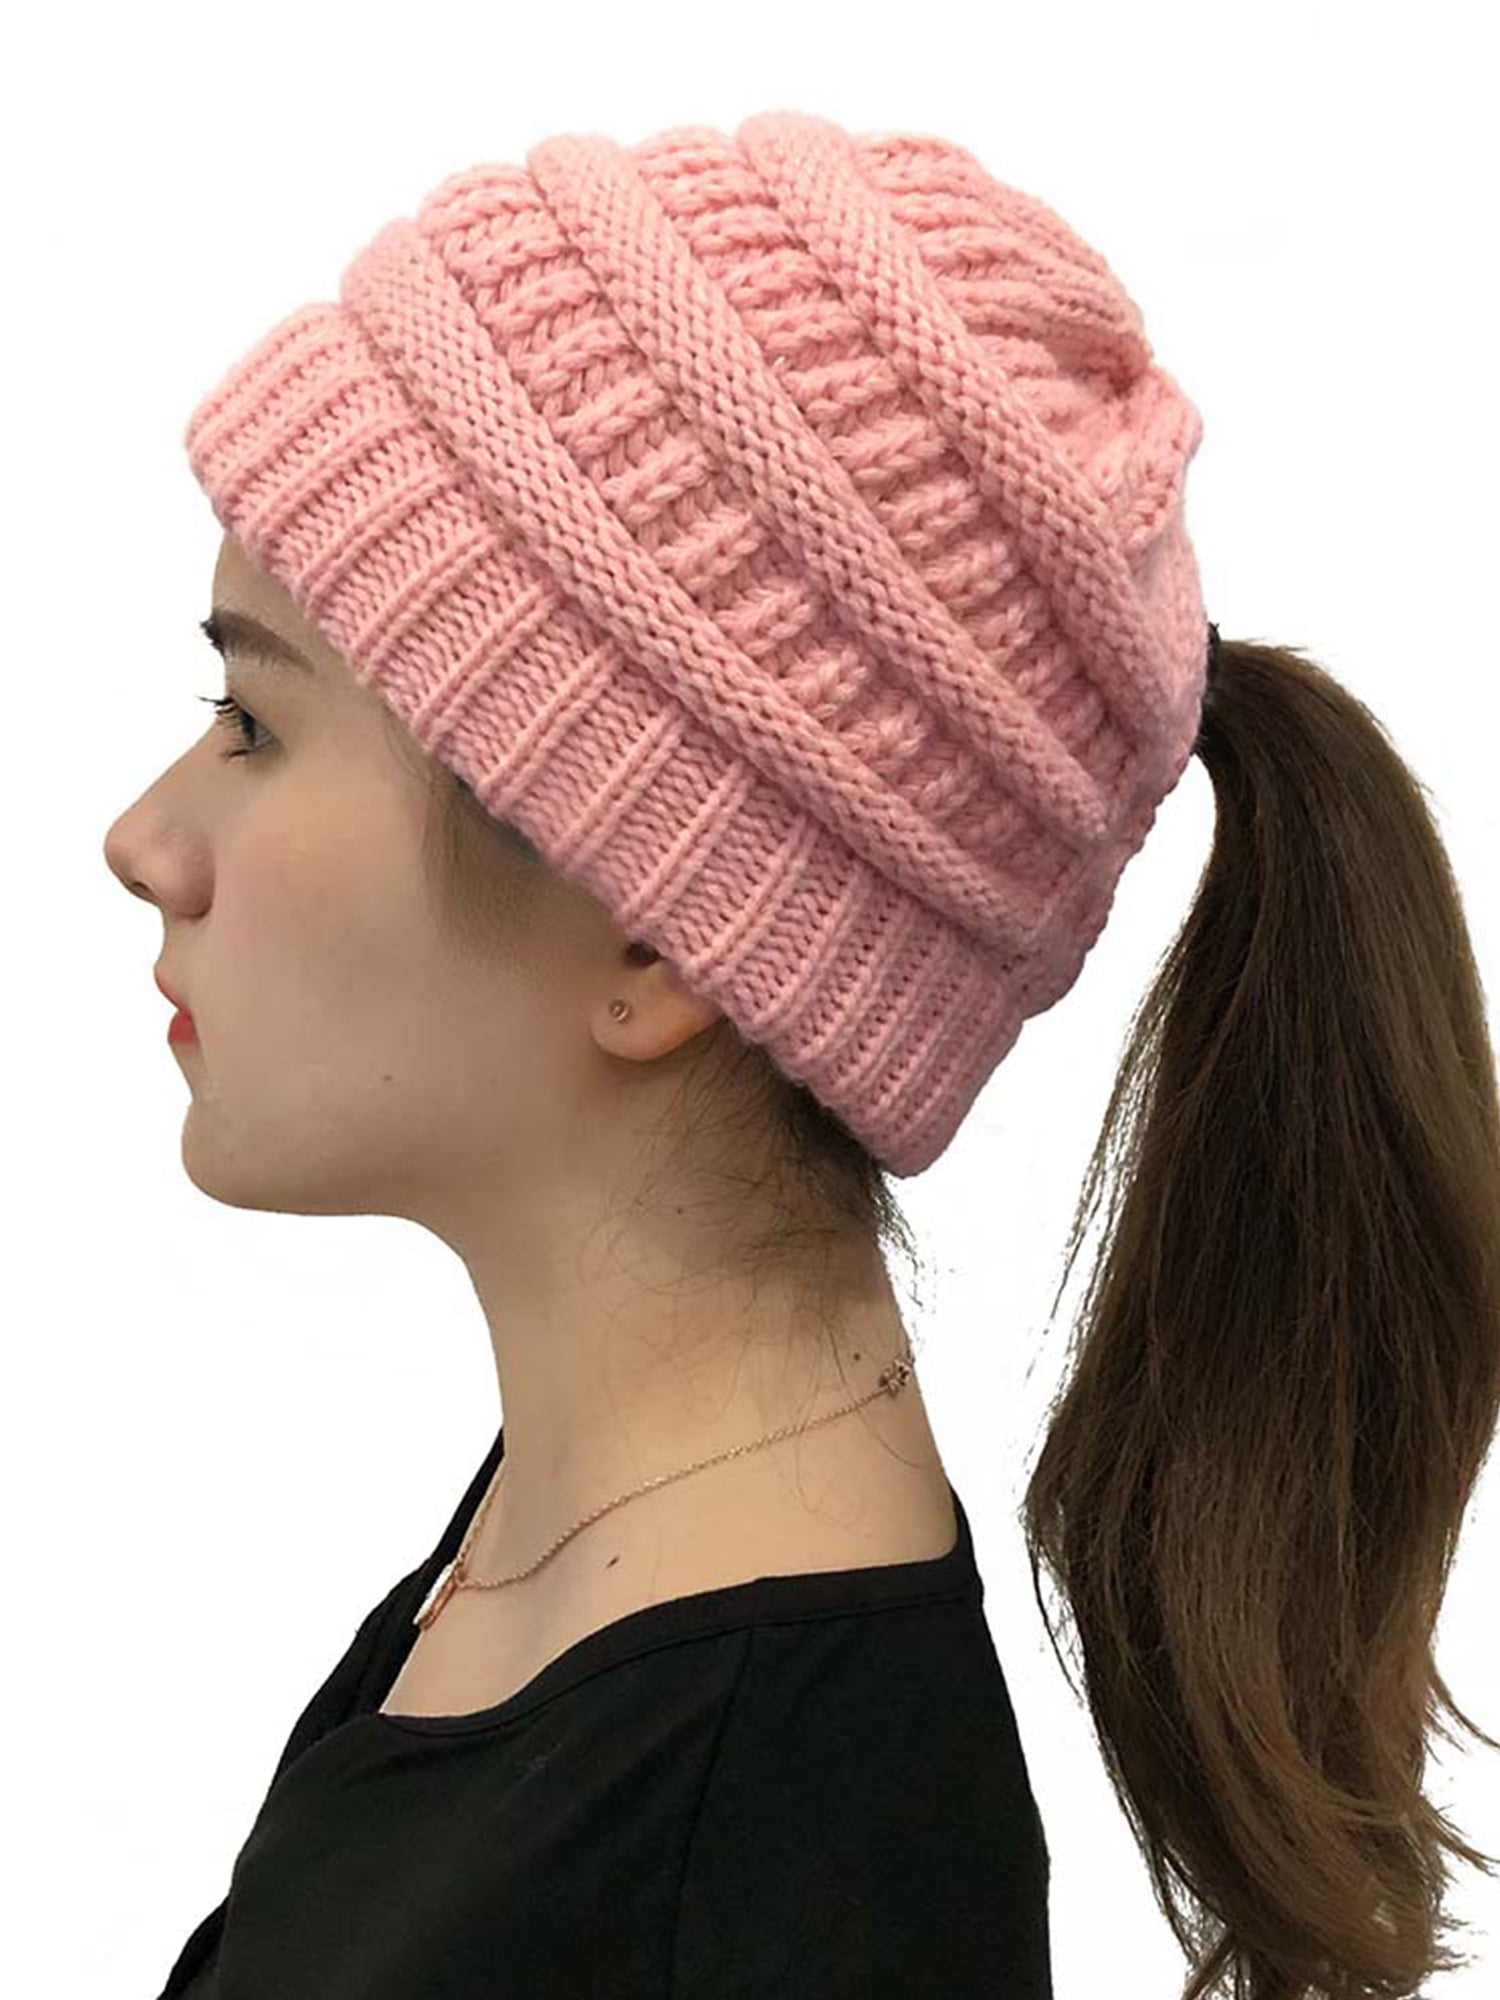 Womens Messy Bun Hat Winter Warmer Ponytail Beanie Stretchy Knitwear Crochet Cap